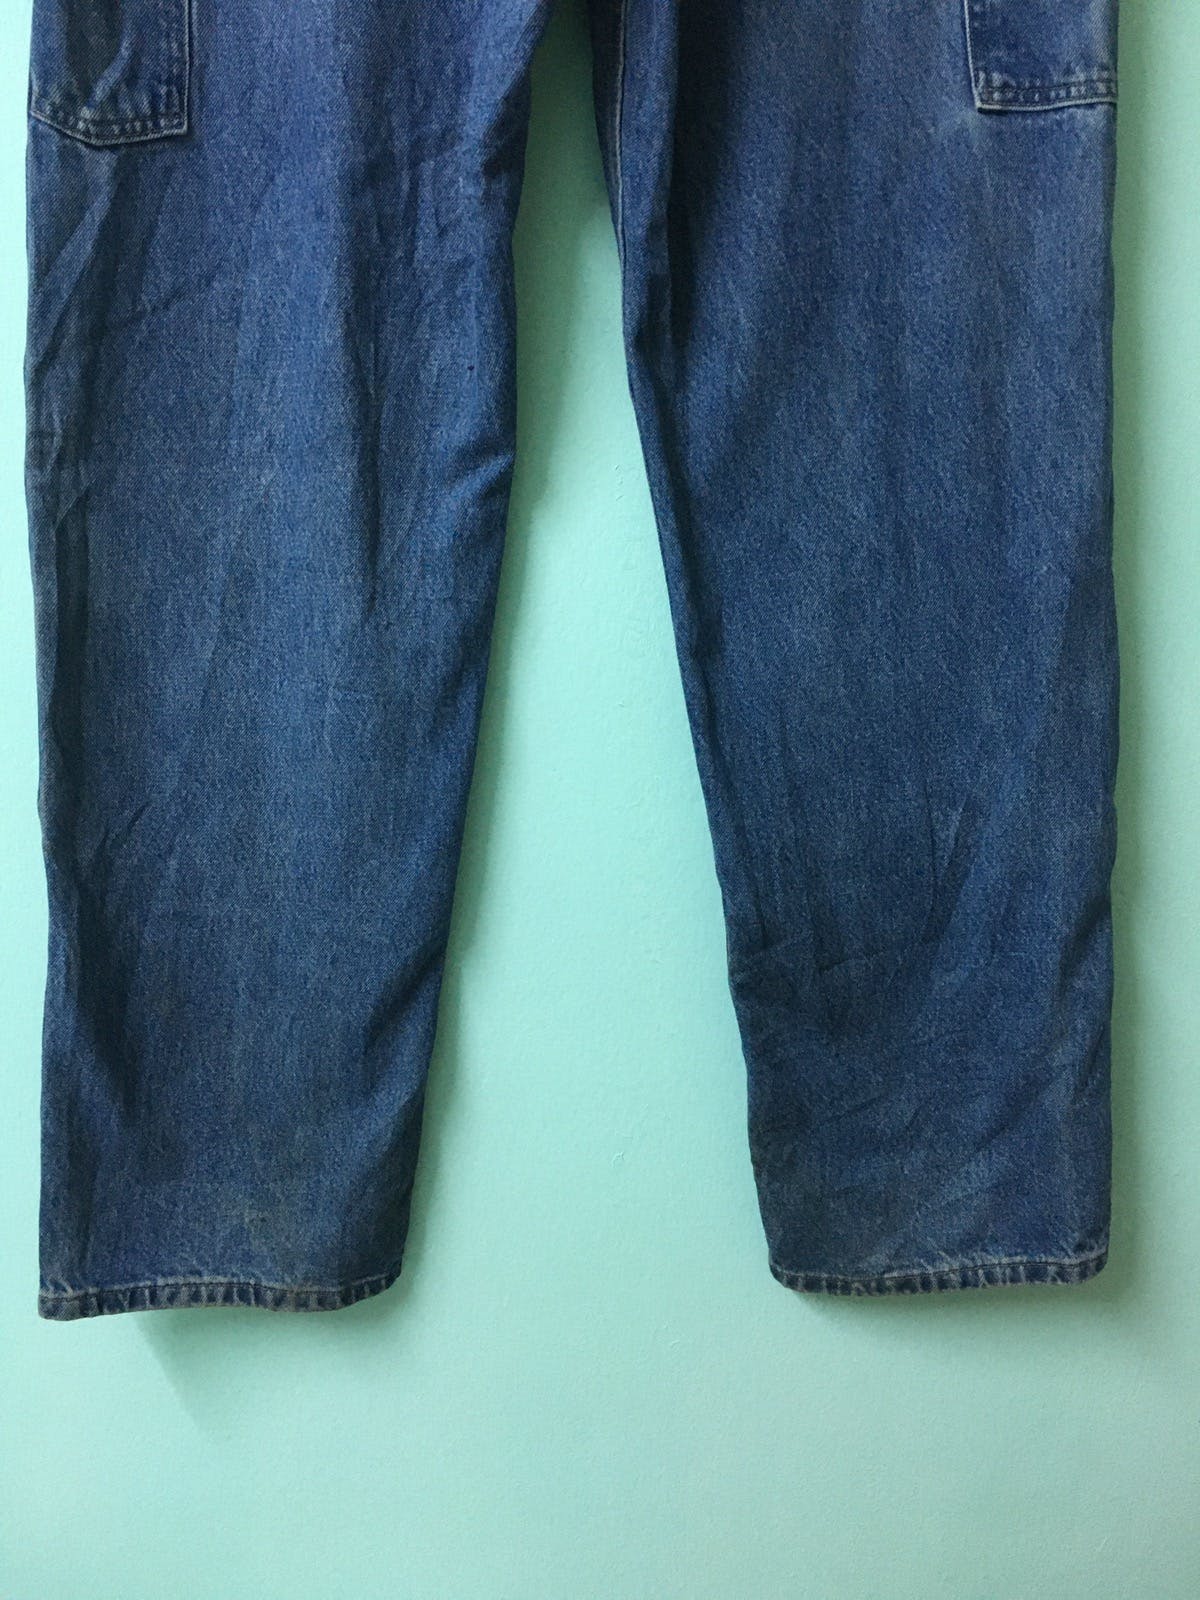 Carharrt double knee jeans - 8